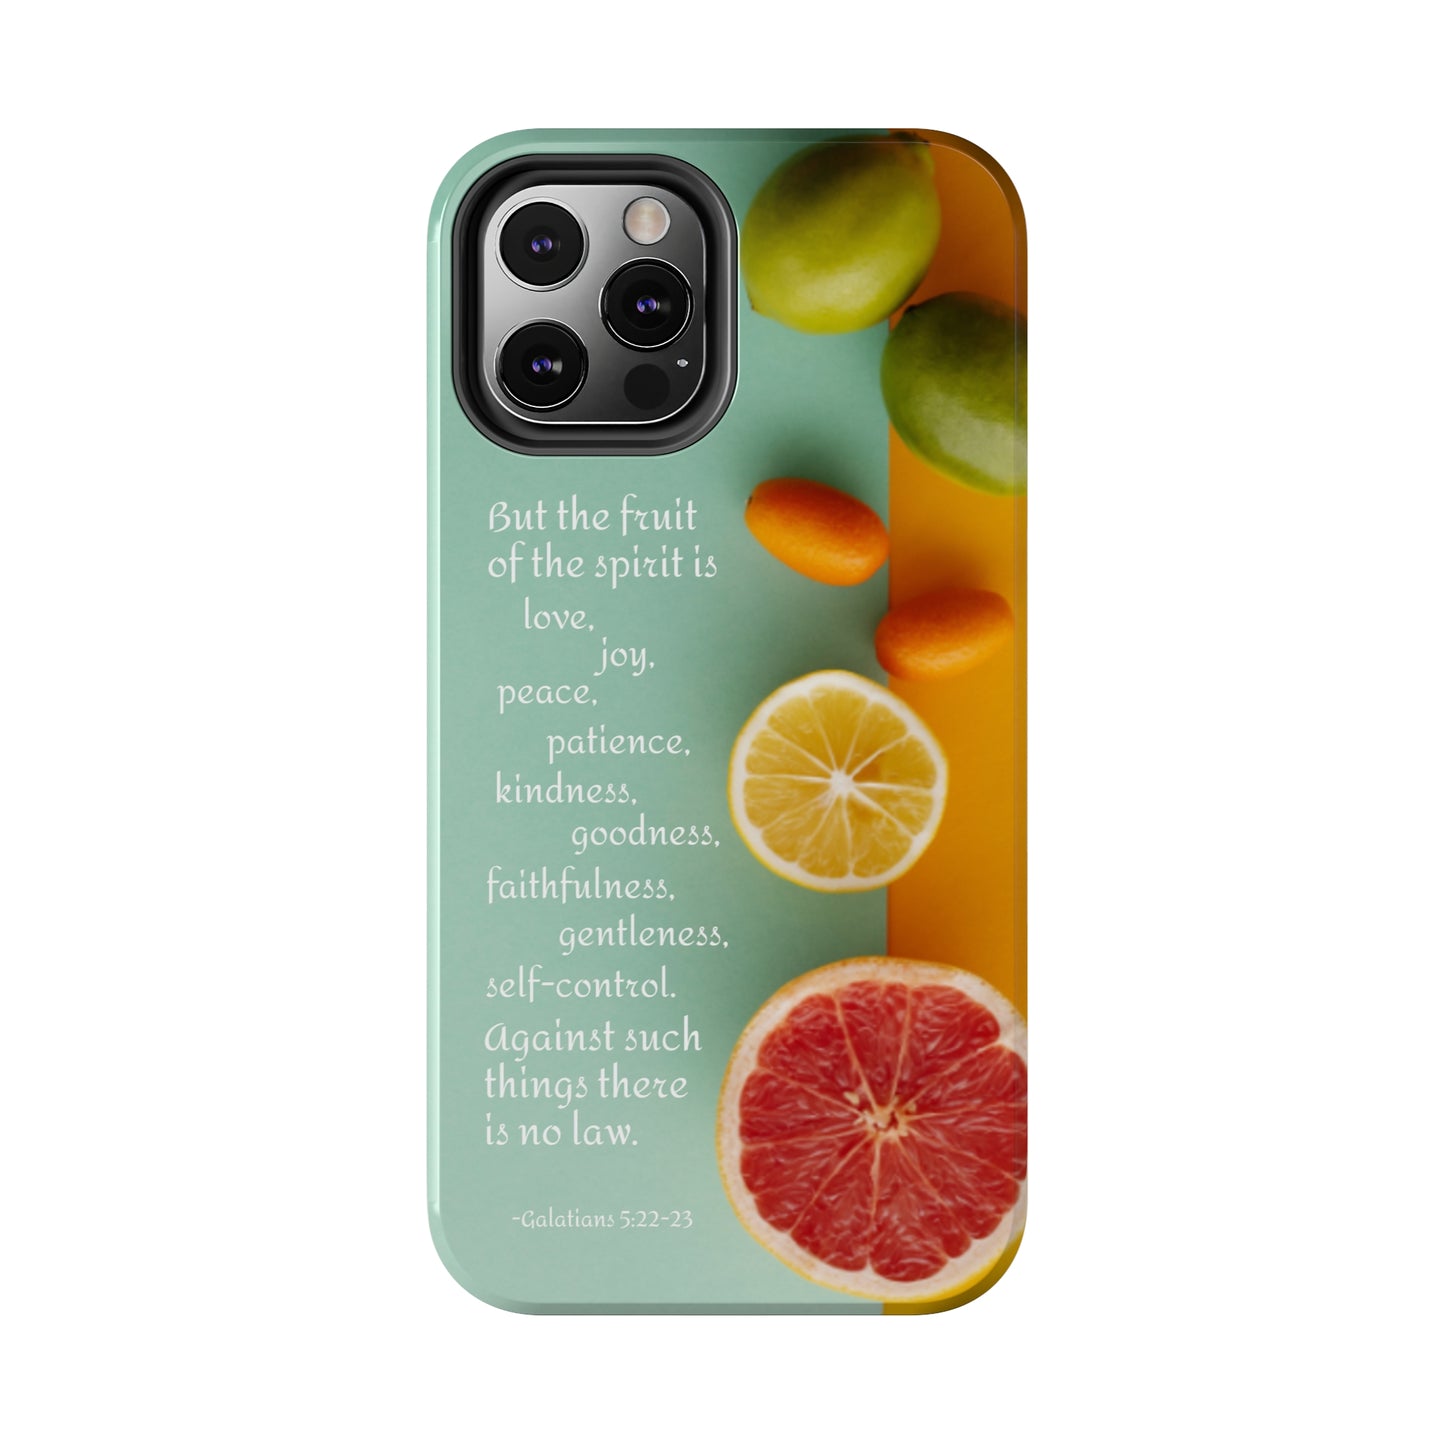 Fruit of the Spirit iPhone case